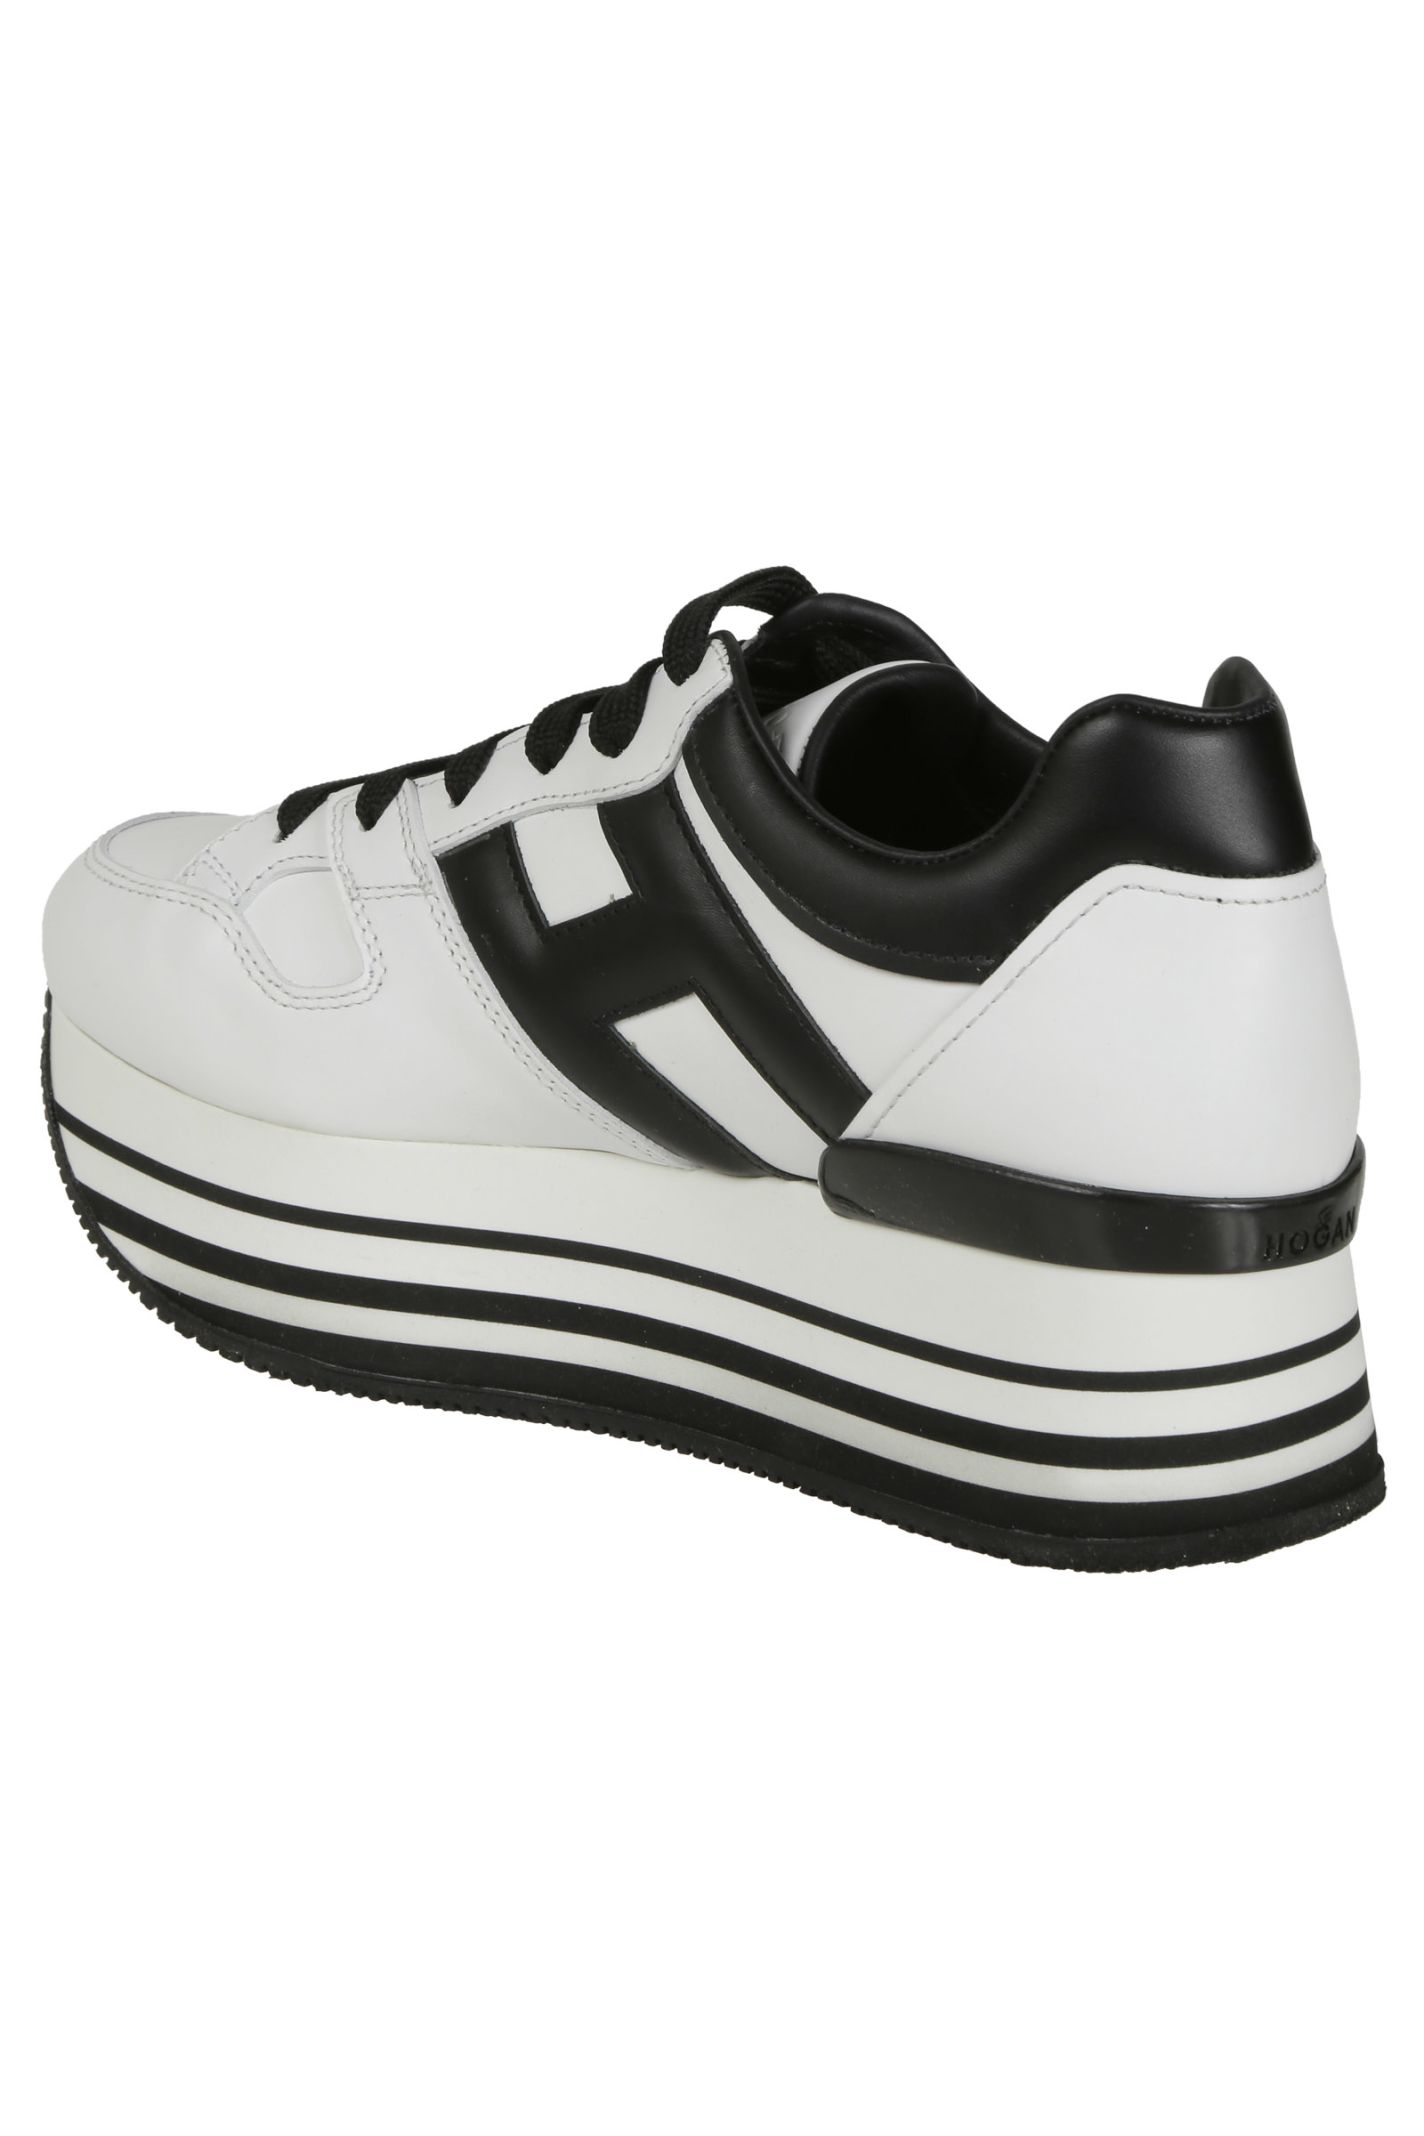 Hogan Hogan Platform Sneakers - White/Black - 10834713 | italist